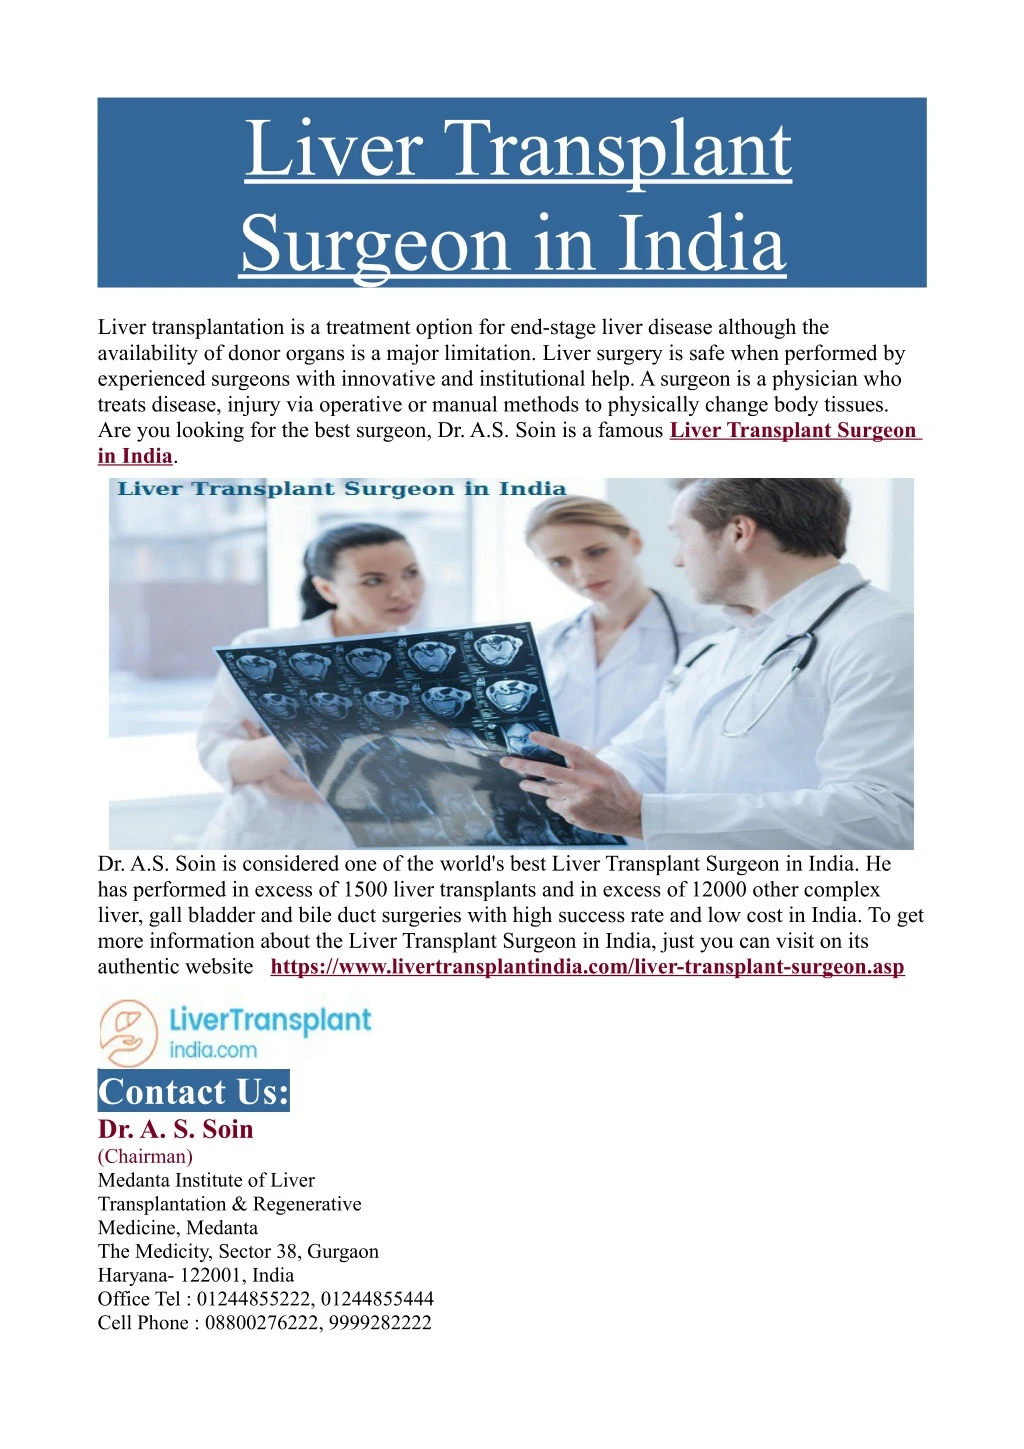 liver transplant surgeon in india